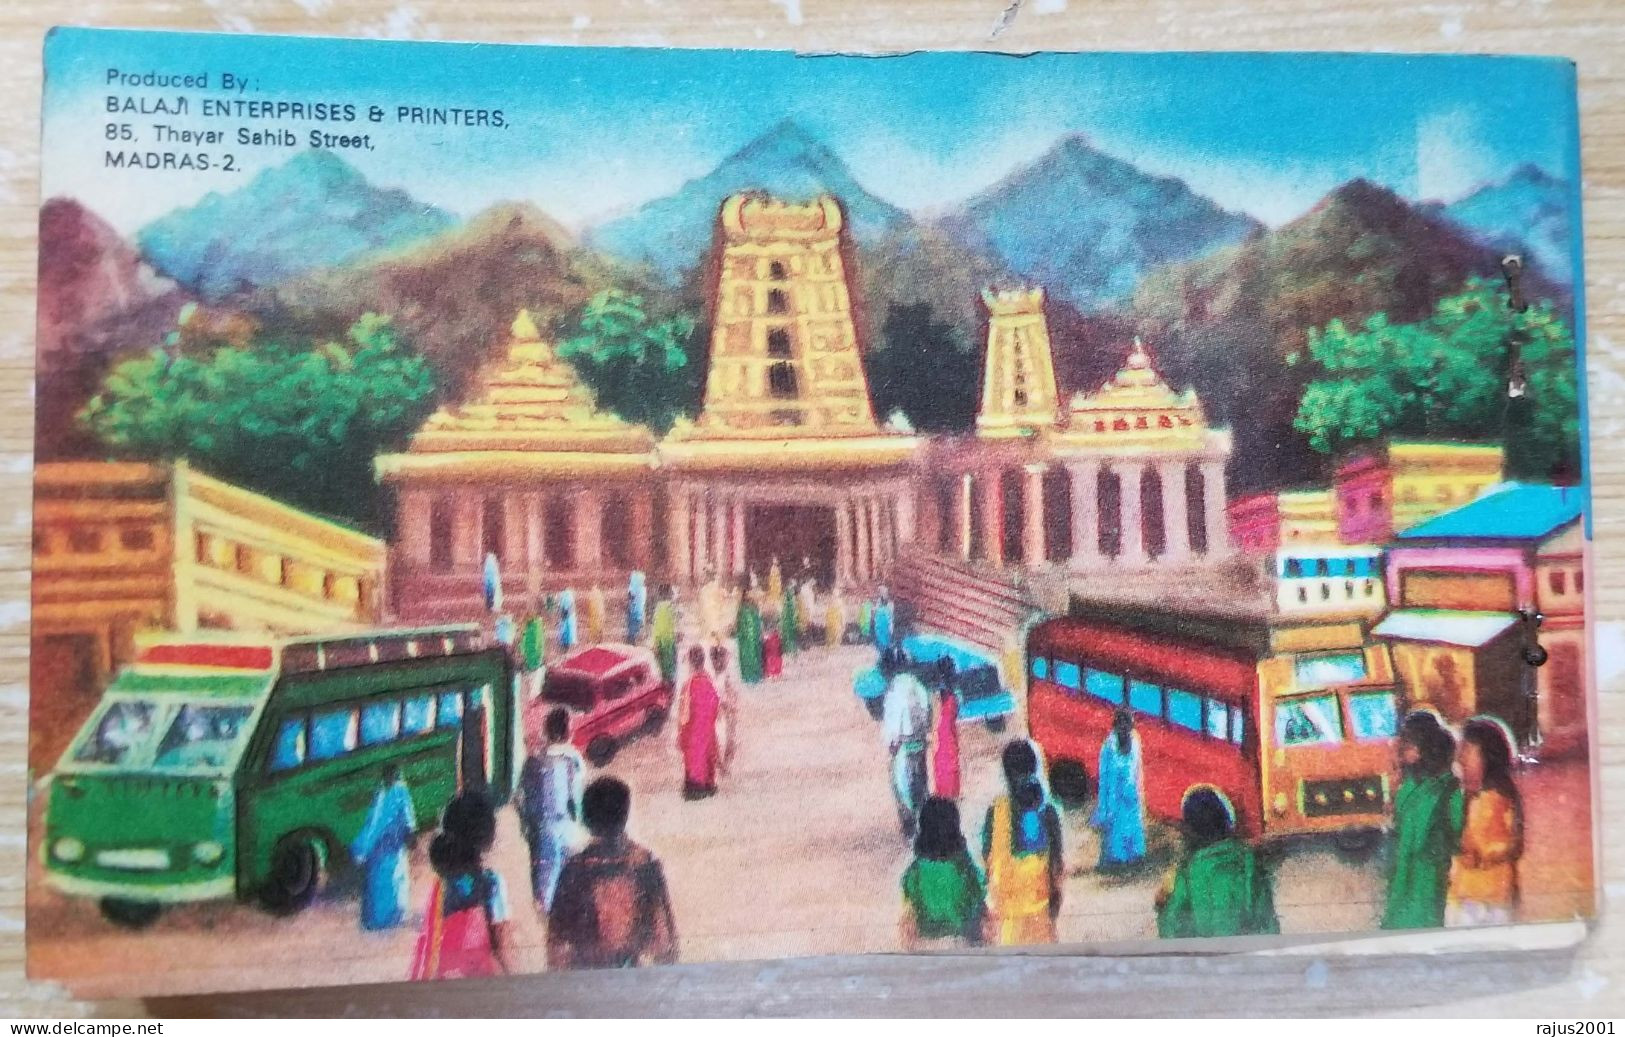 Kancheepuram Hindu Temple Album with Details, Lord Varadaraja, Perumal, God Goddess, Hinduism, Mythology 13 Card Booklet